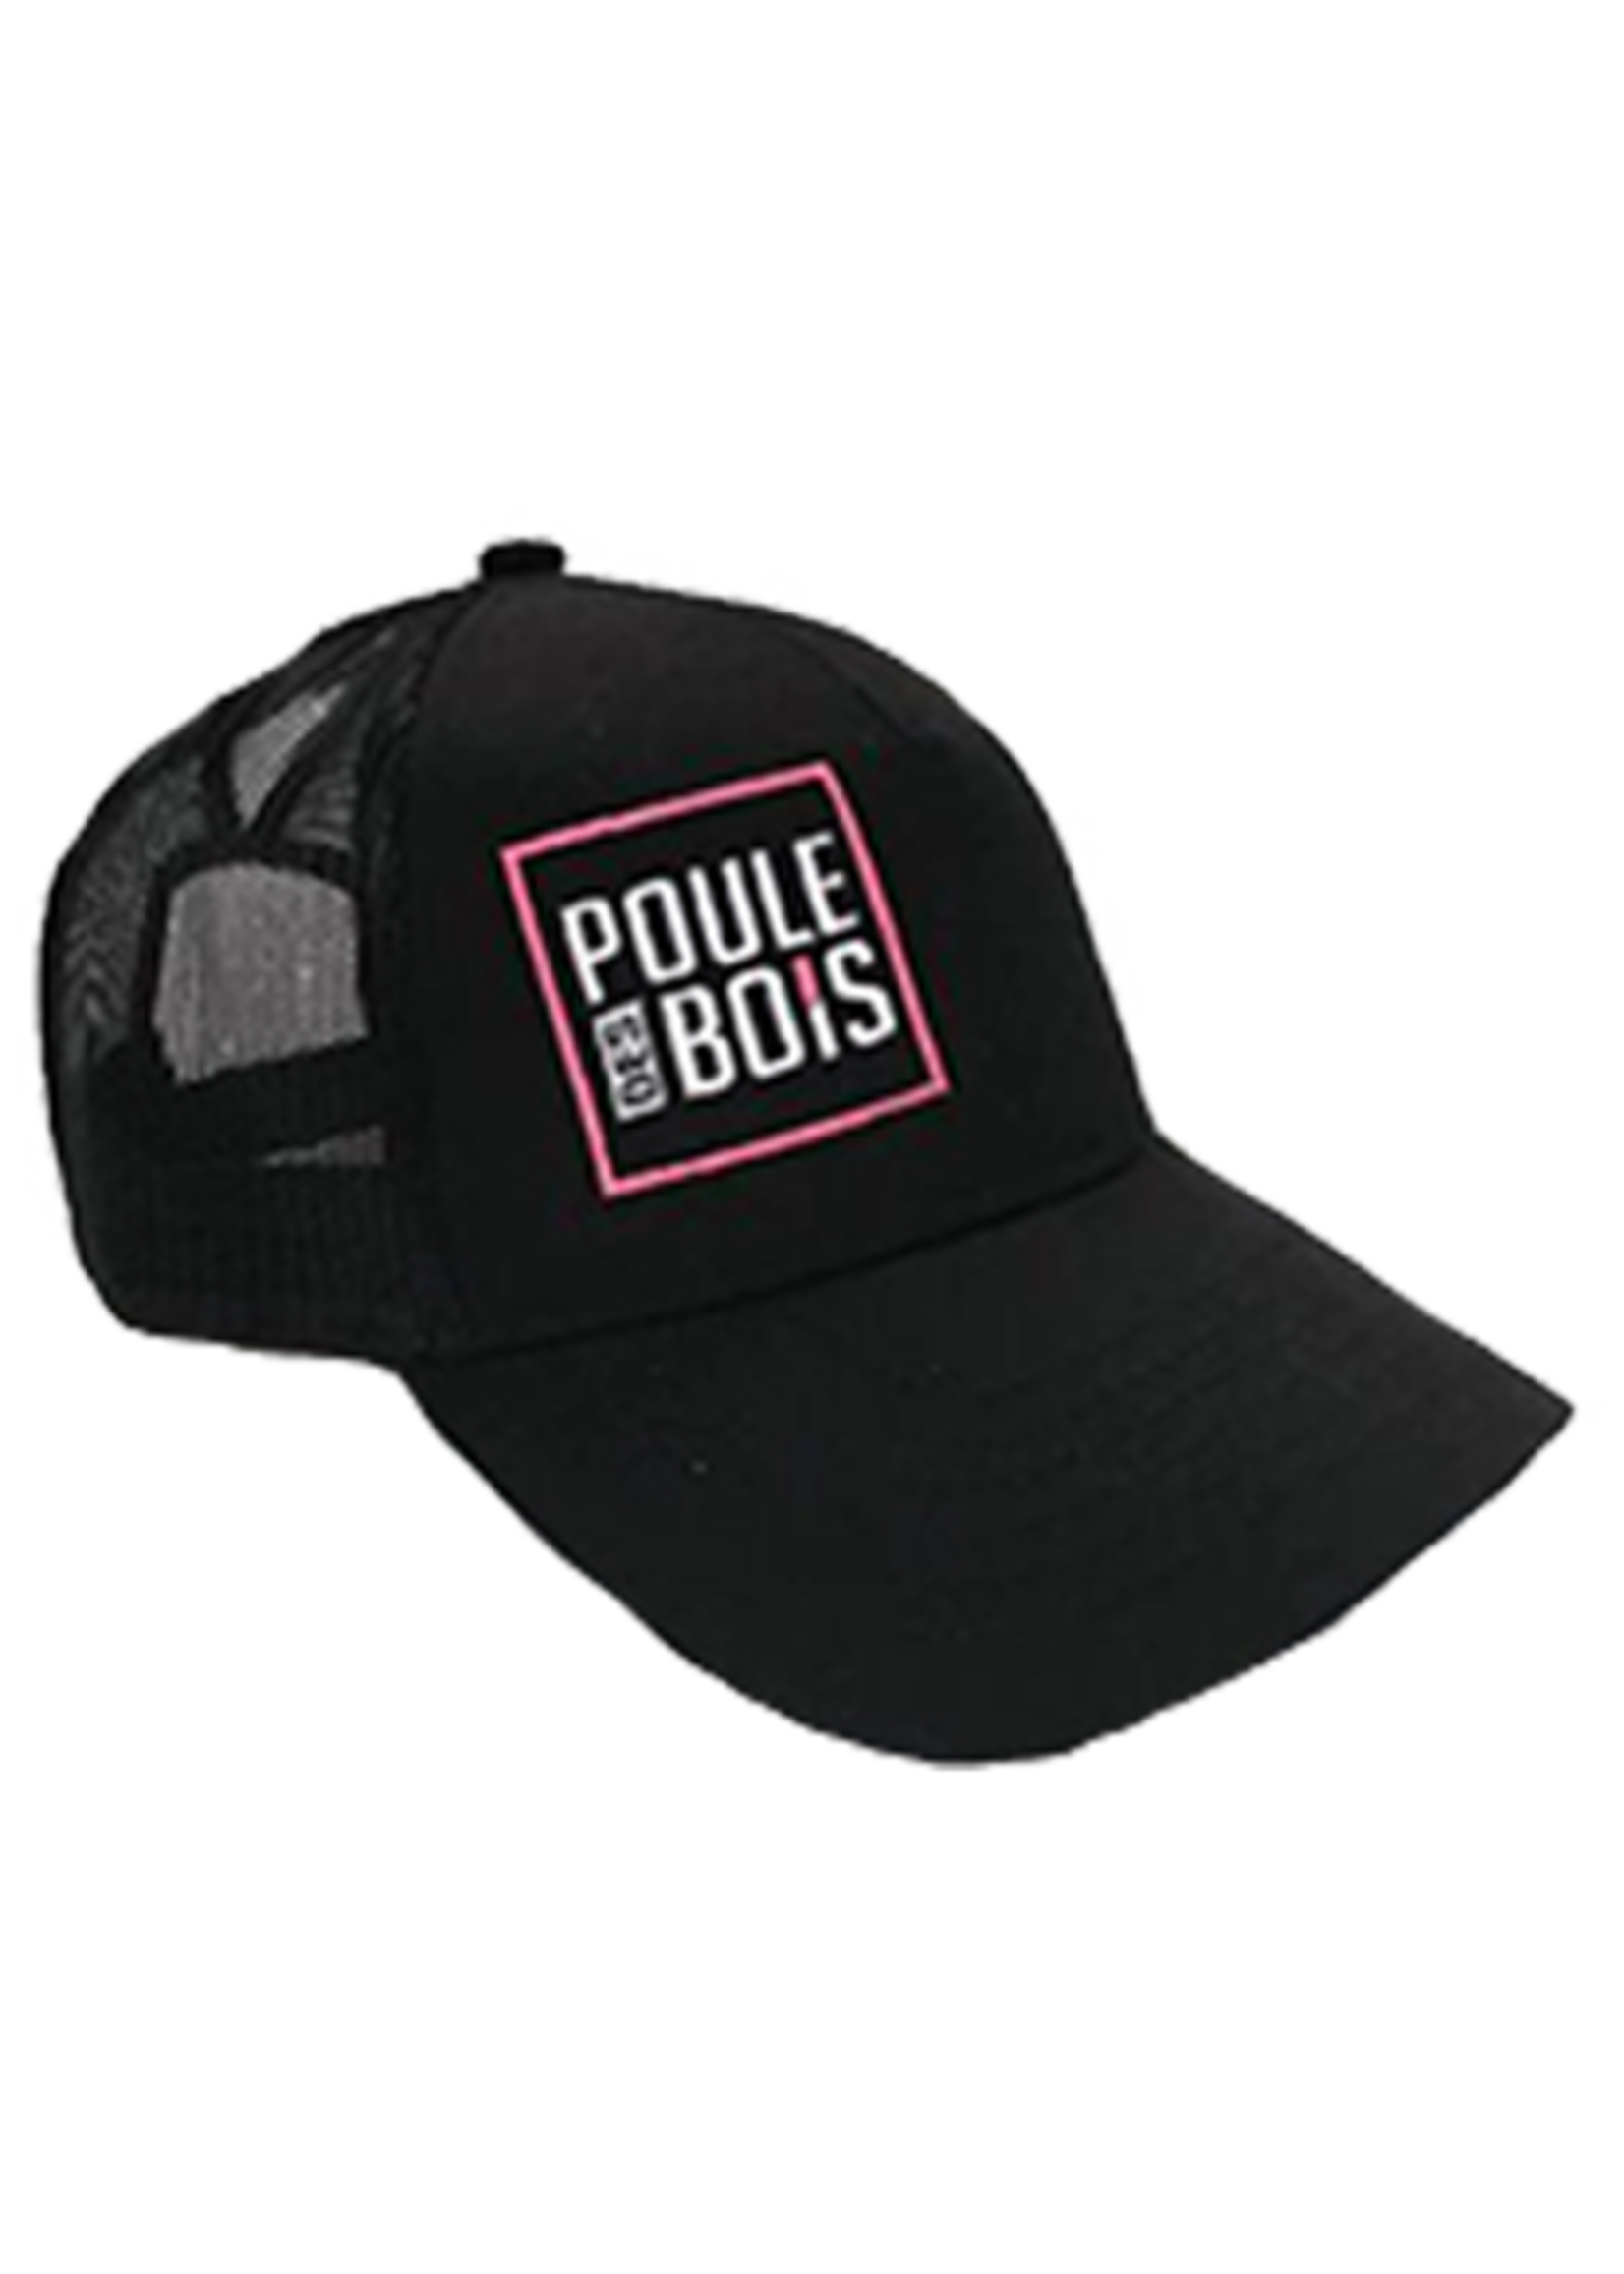 Poule des bois Ponytail cap with black and pink logo